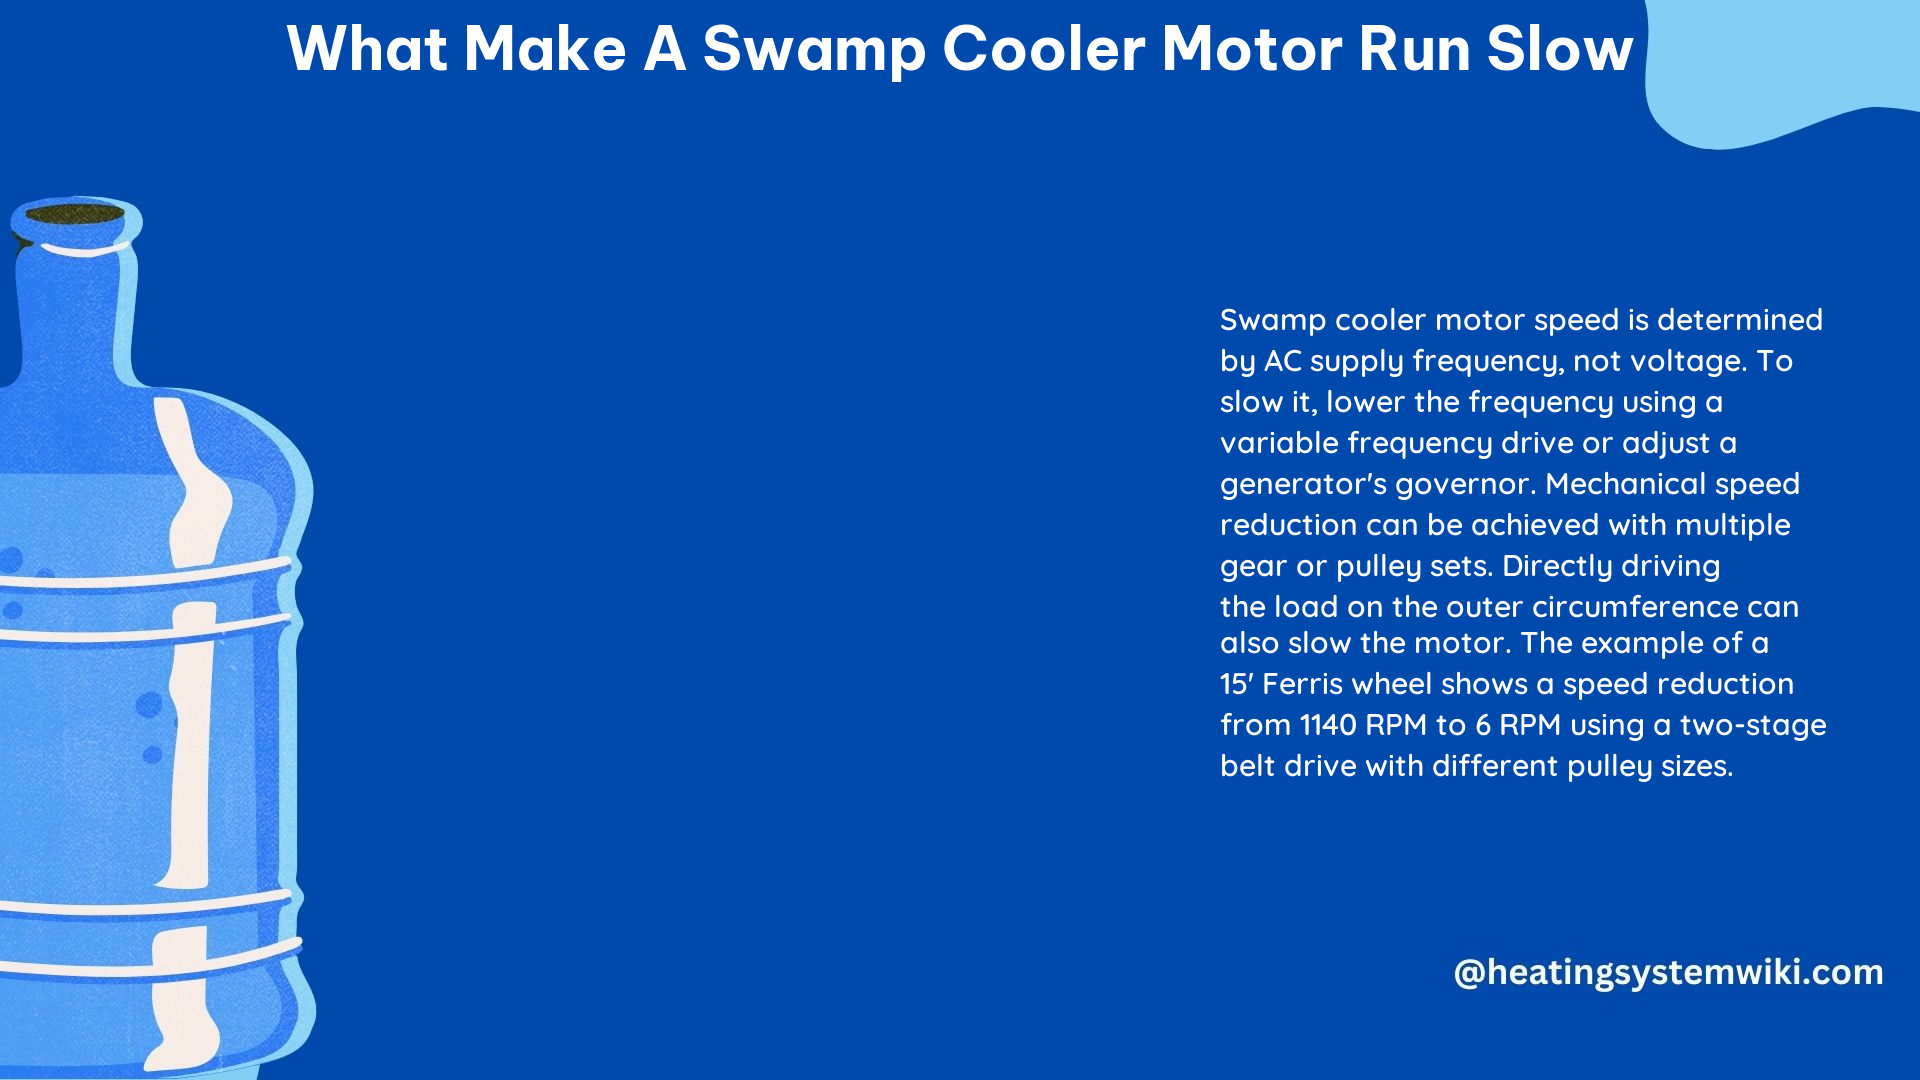 What Make a Swamp Cooler Motor Run Slow